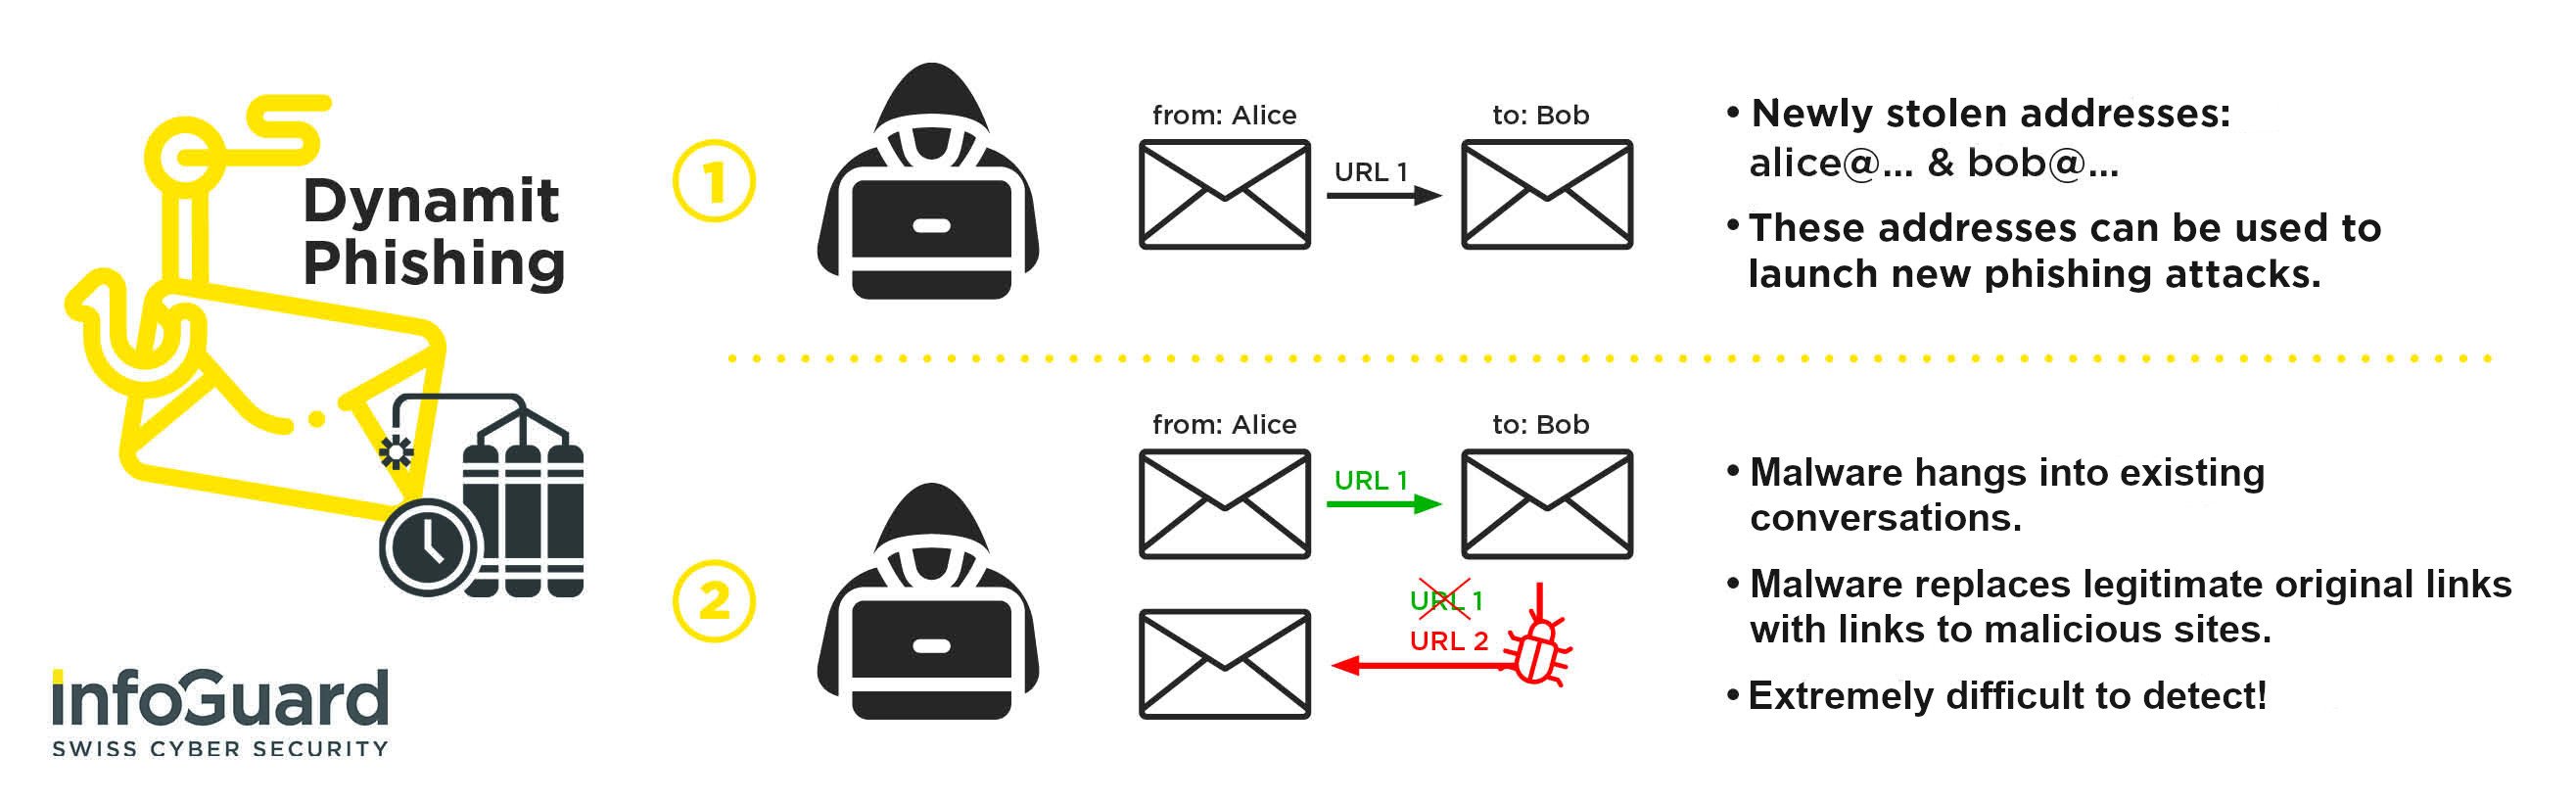 infoguard-cyber-security-dynamit-phishing-mail_en